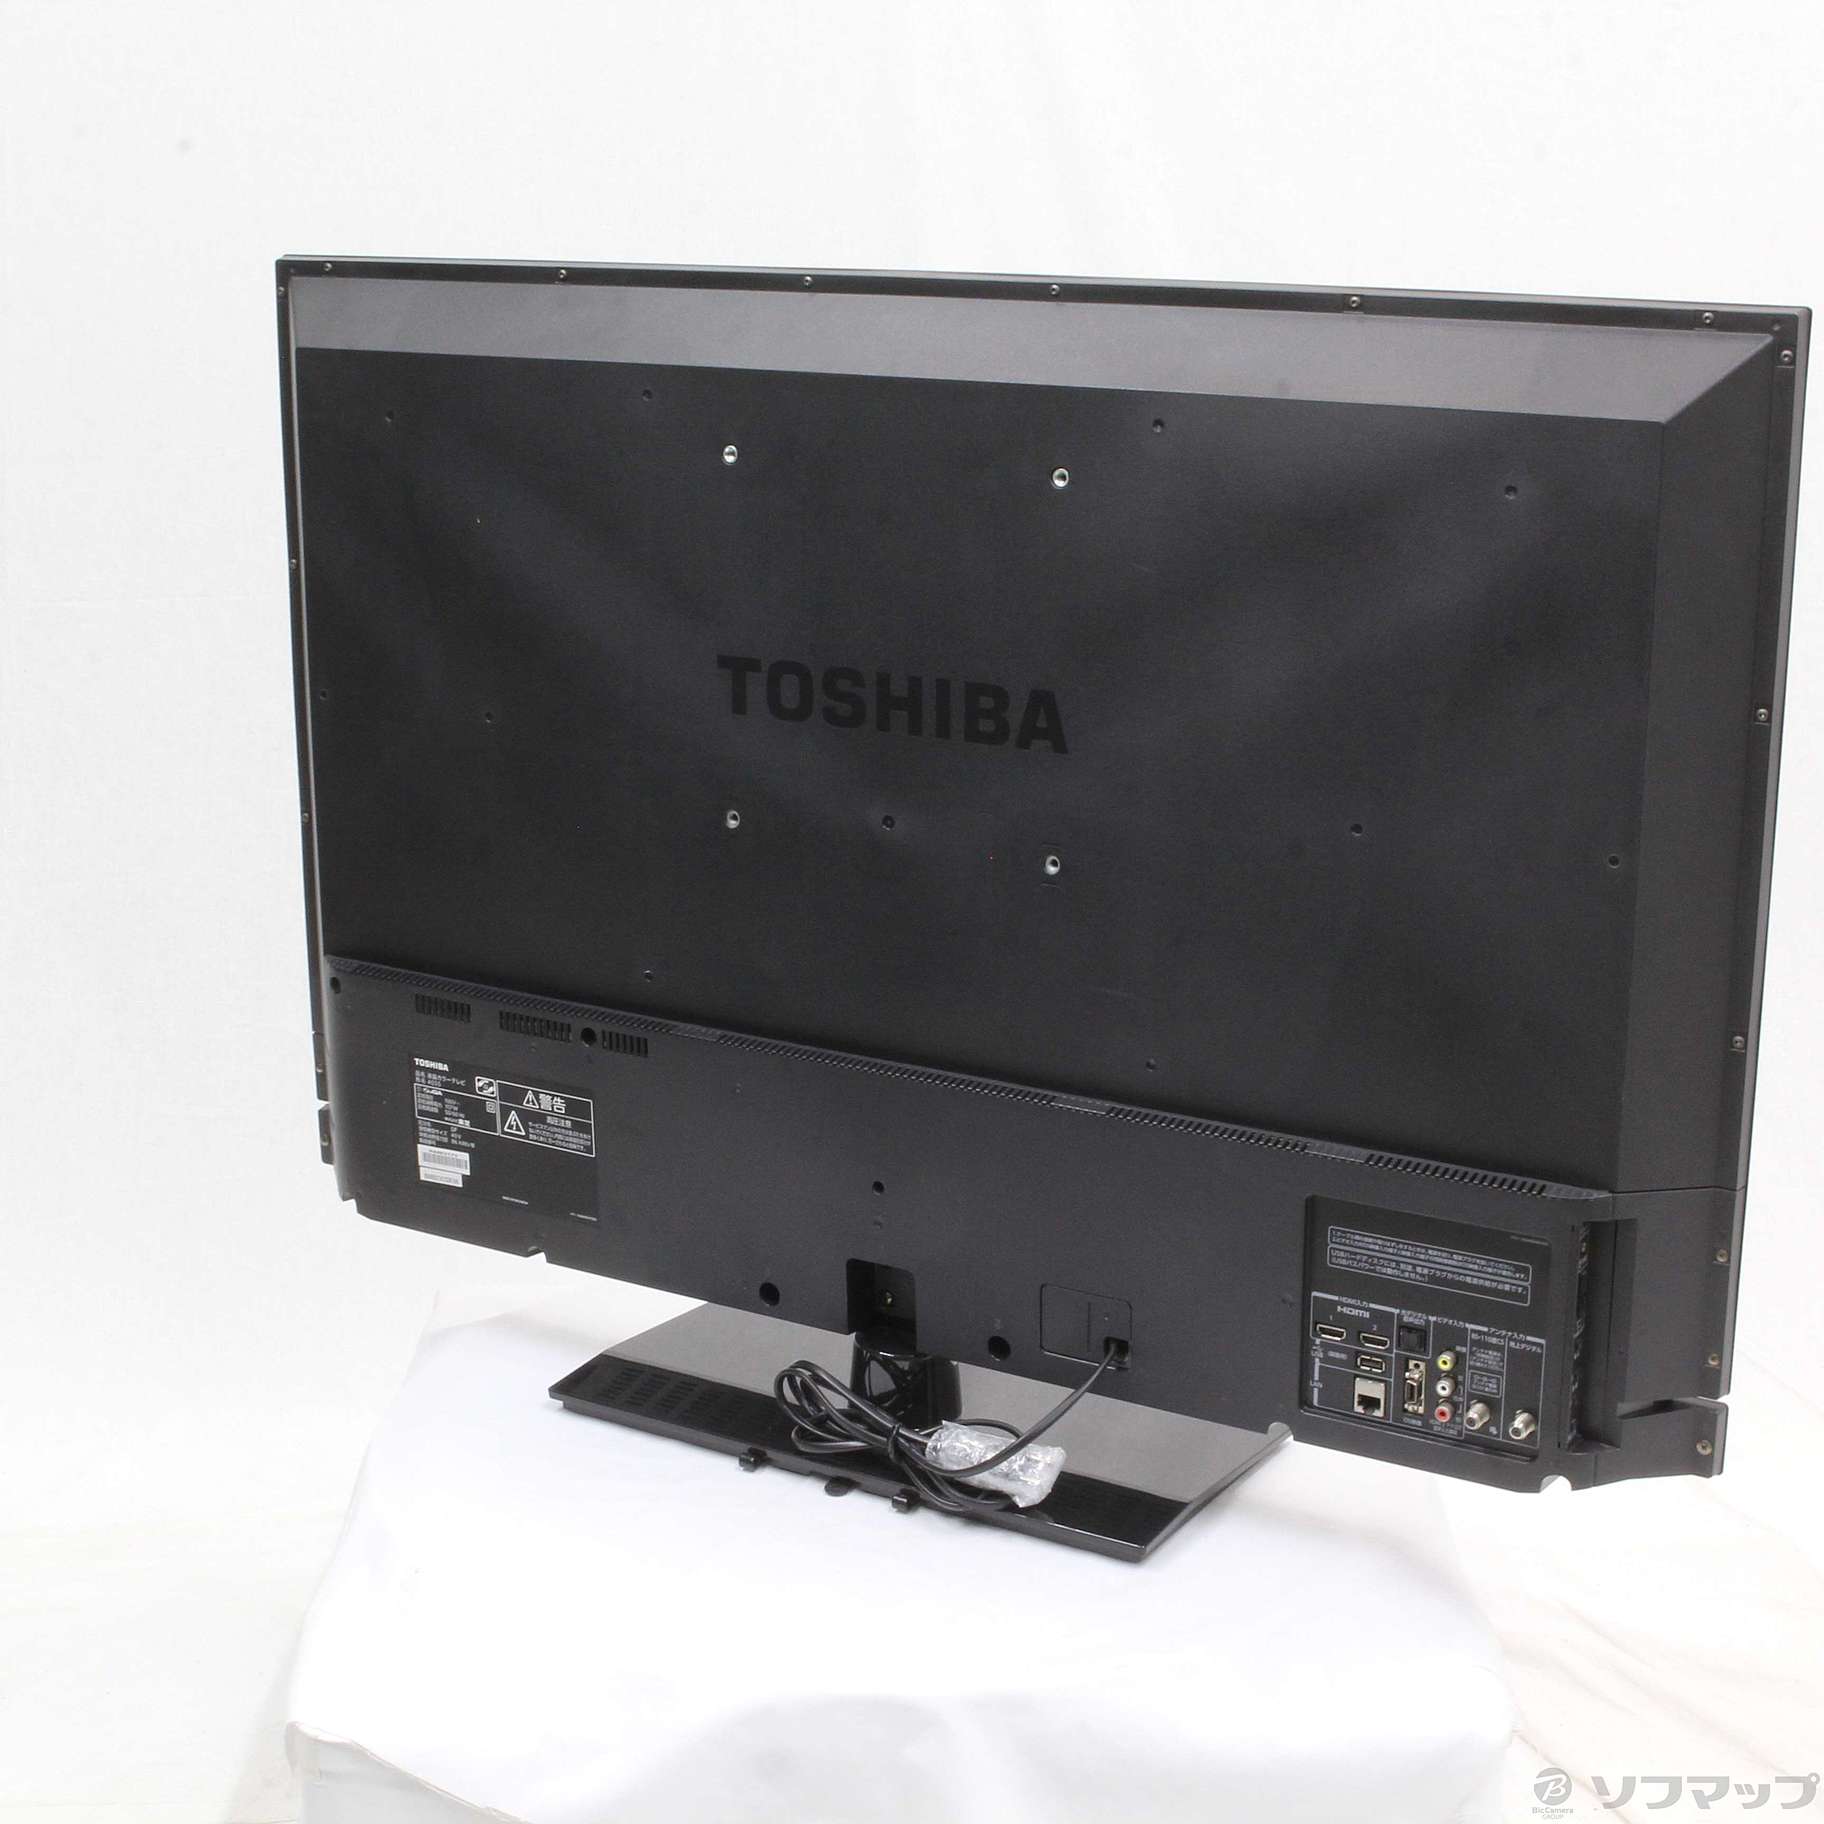 TOSHIBA REGZA 40S5 - テレビ